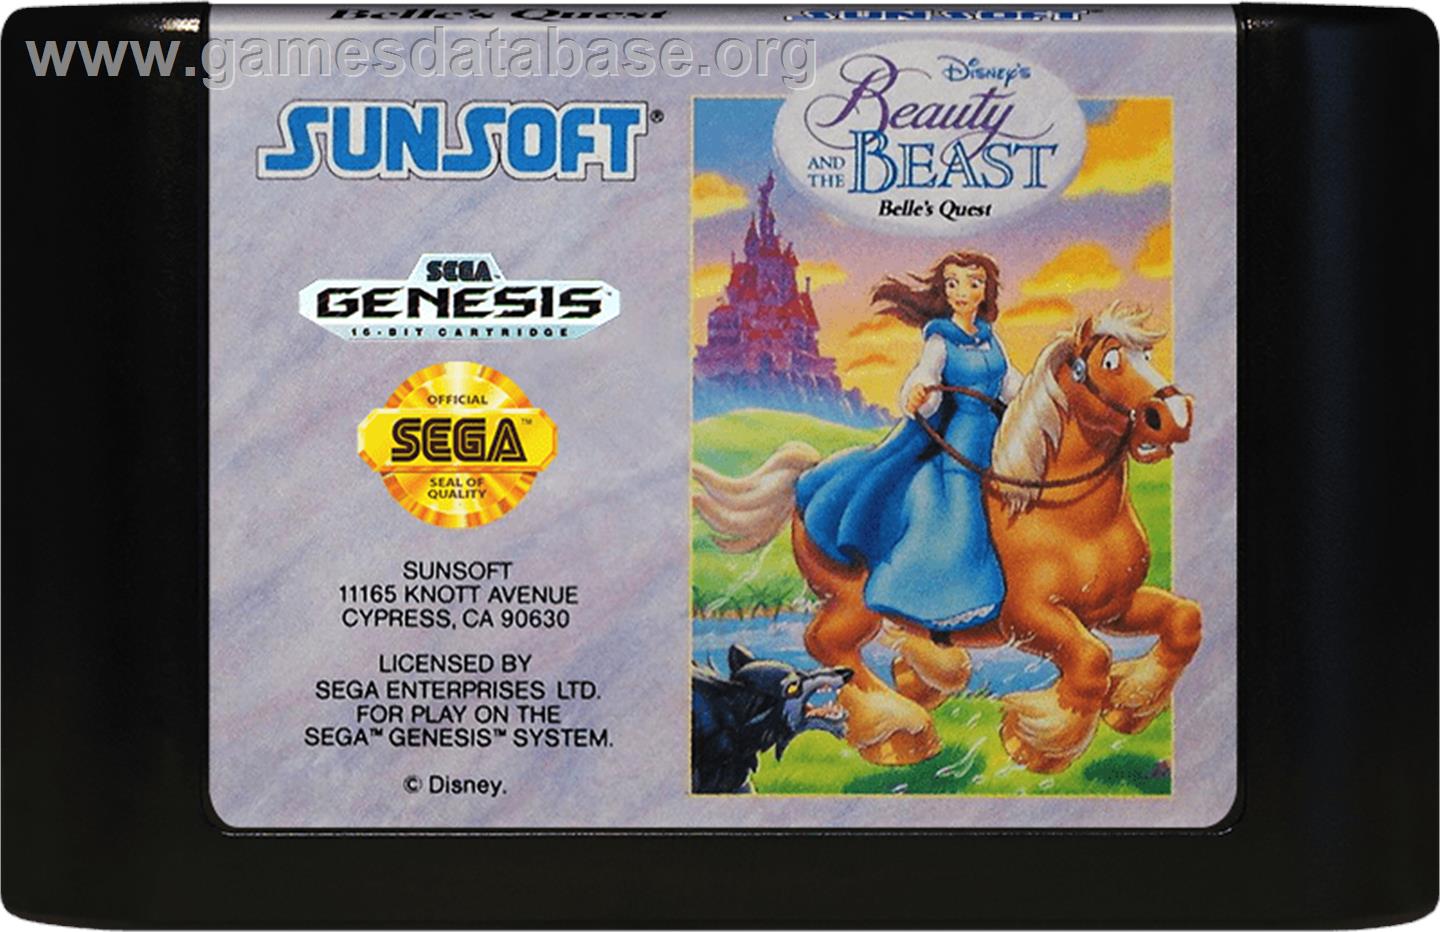 Beauty and the Beast: Belle's Quest - Sega Genesis - Artwork - Cartridge